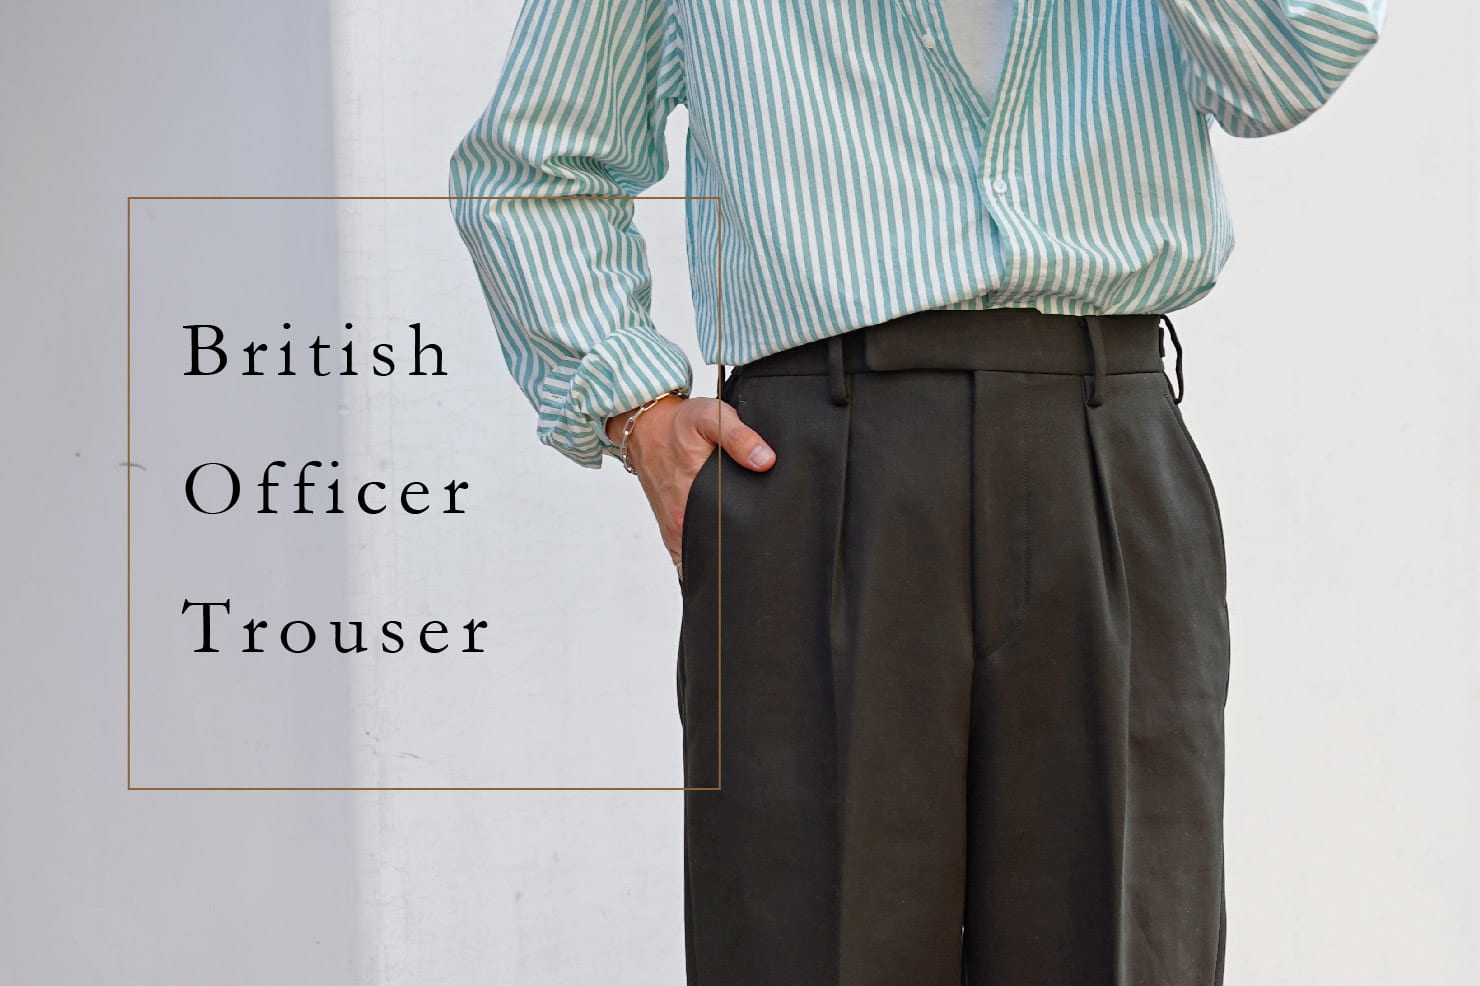 BLOOM&BRANCH British Officer Trouser / 追加予約のおしらせ